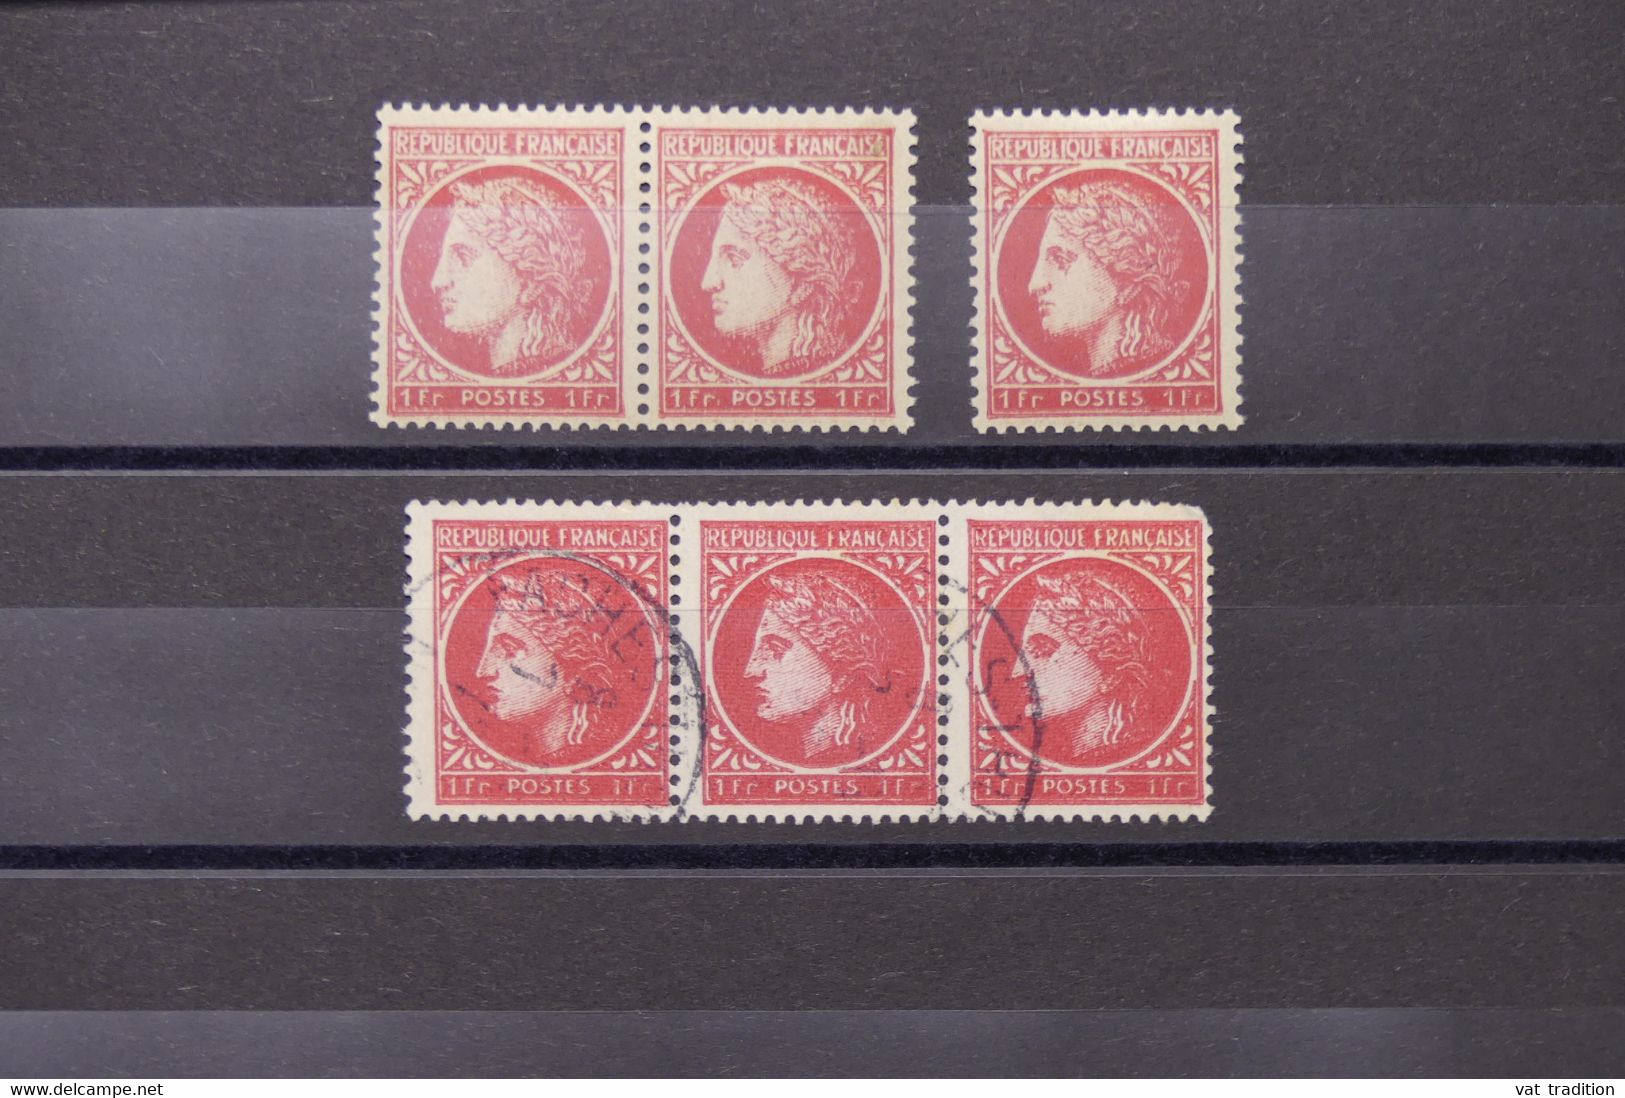 FRANCE - Variété - N° Yvert 676 - Type Mazelin - Impression Lourde + Floue  - Neuf Et Oblitérés - L 74082 - Used Stamps